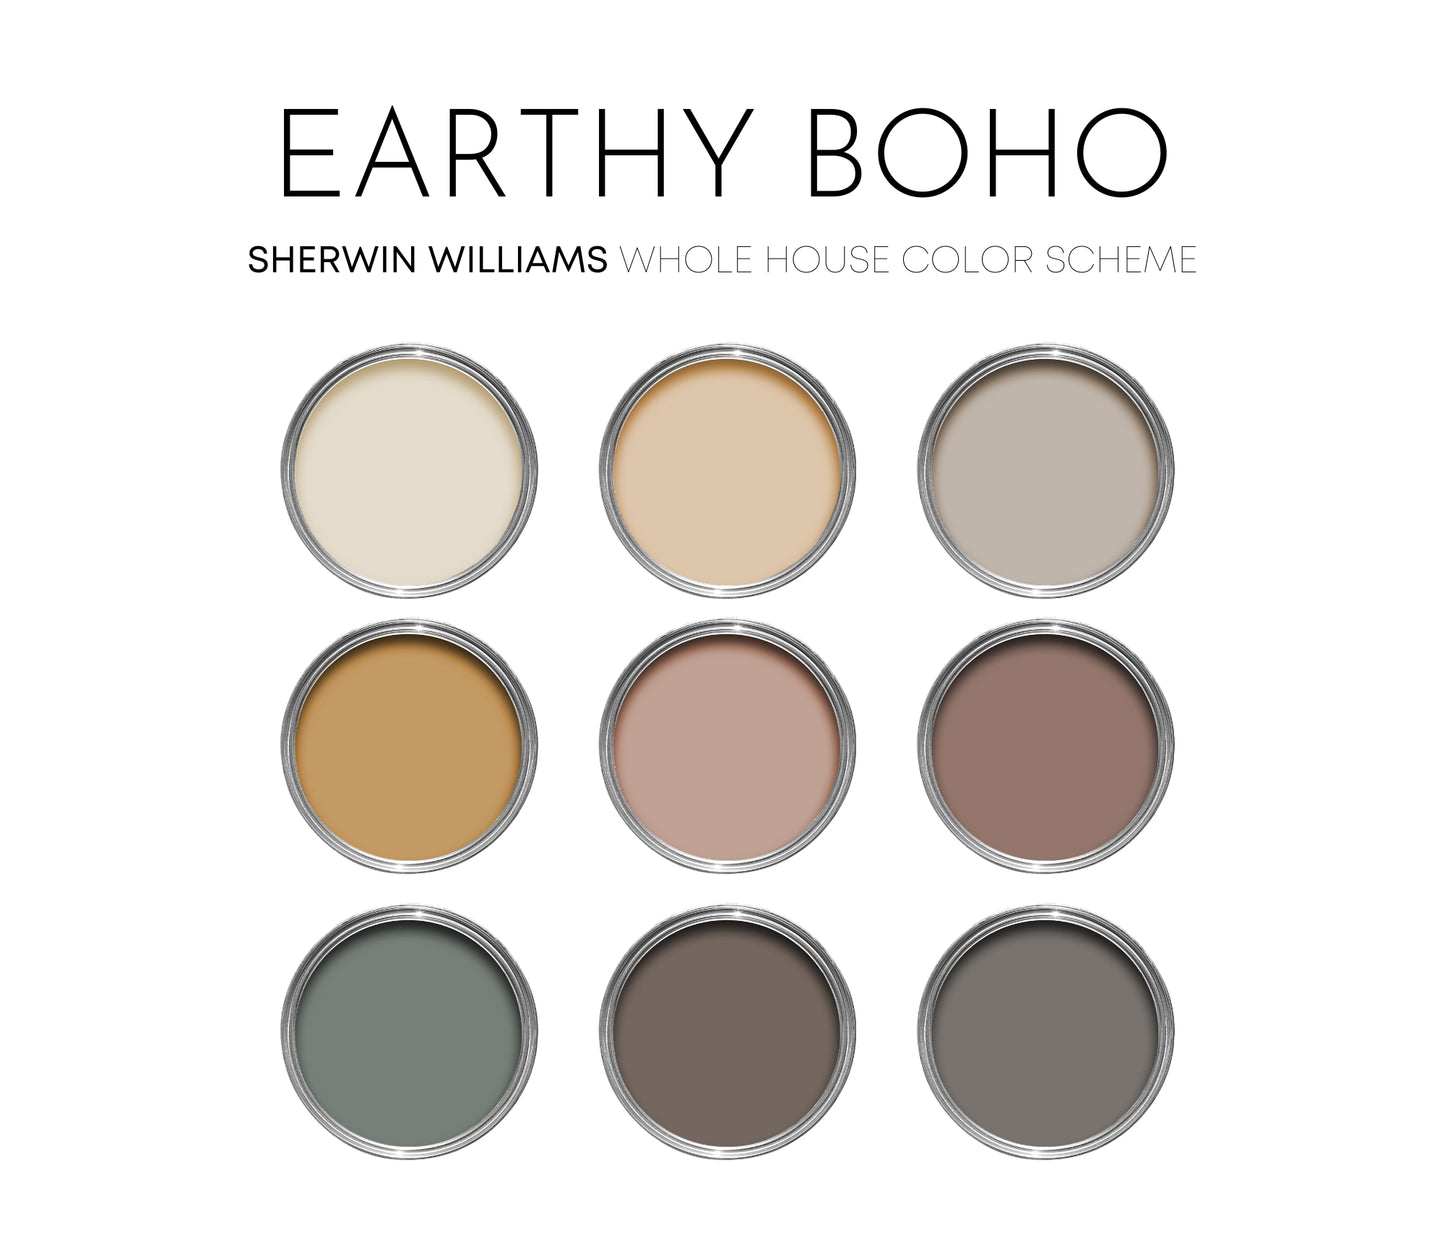 Earthy Boho Sherwin Williams Paint Palette, Neutral Interior Paint Colors, Earthy Color Scheme, Neutral Ground Compliments, Warm Neutrals